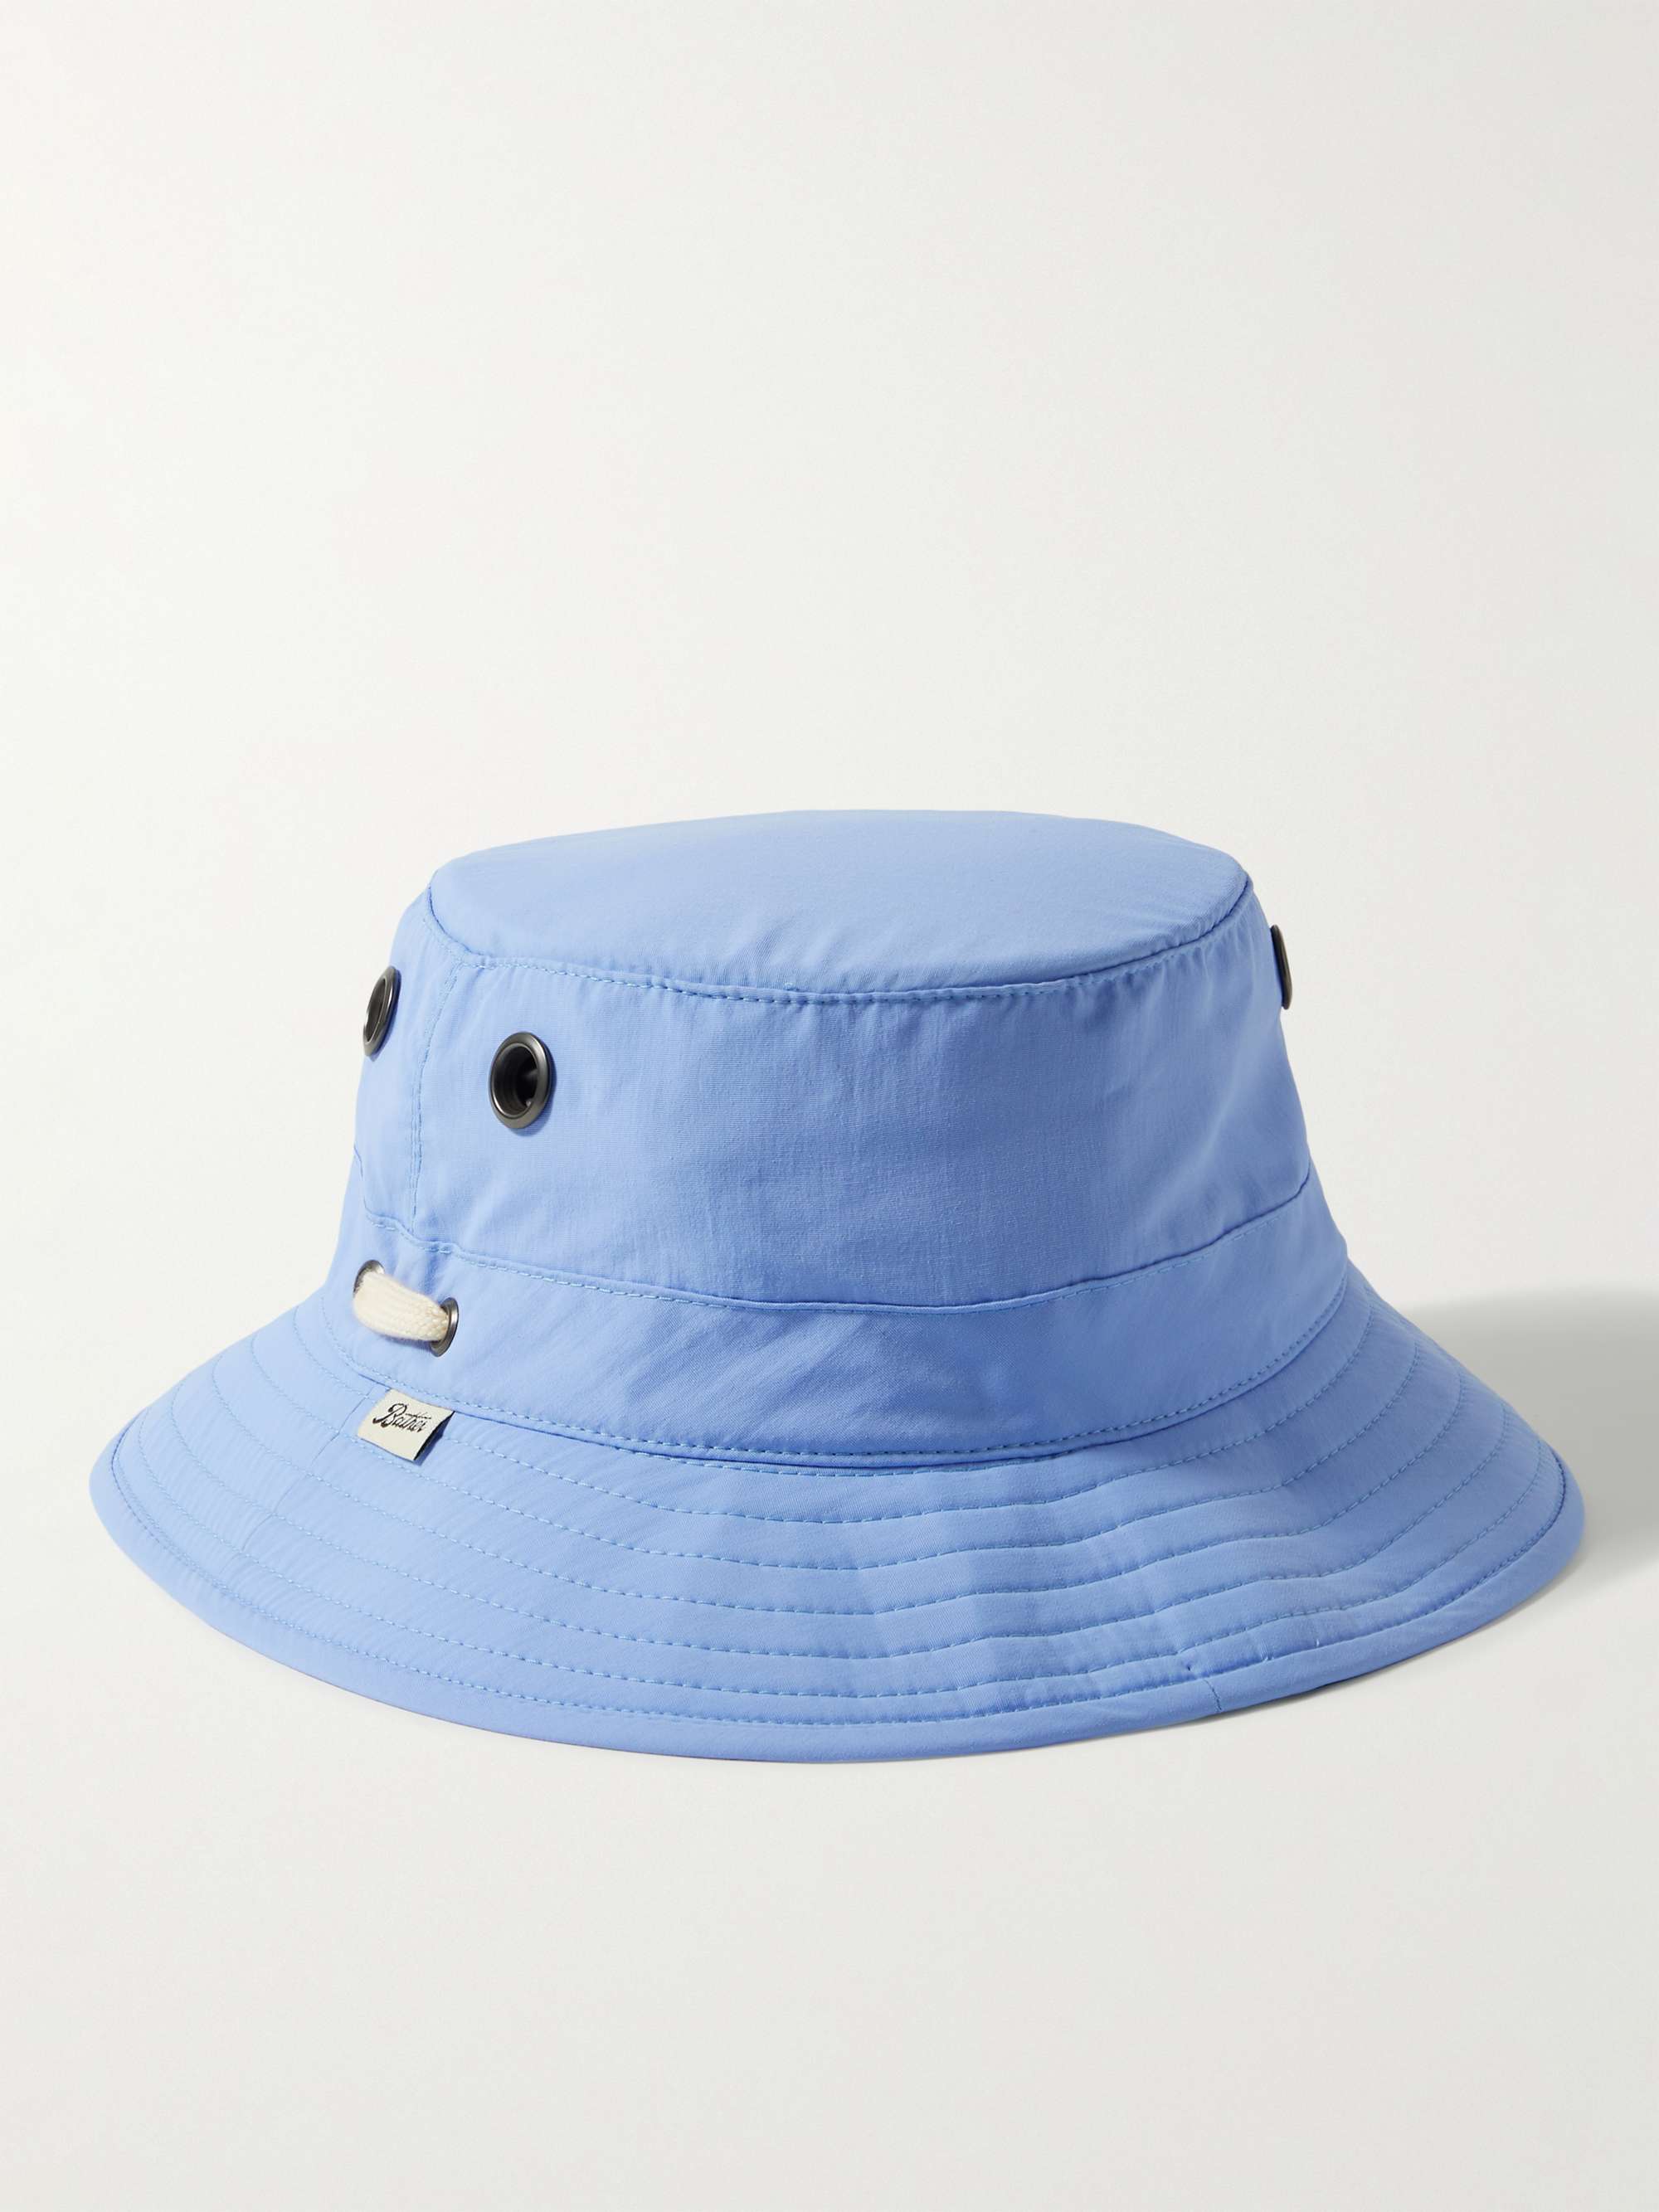 BATHER + Tilley T1 Nylon Bucket Hat for Men